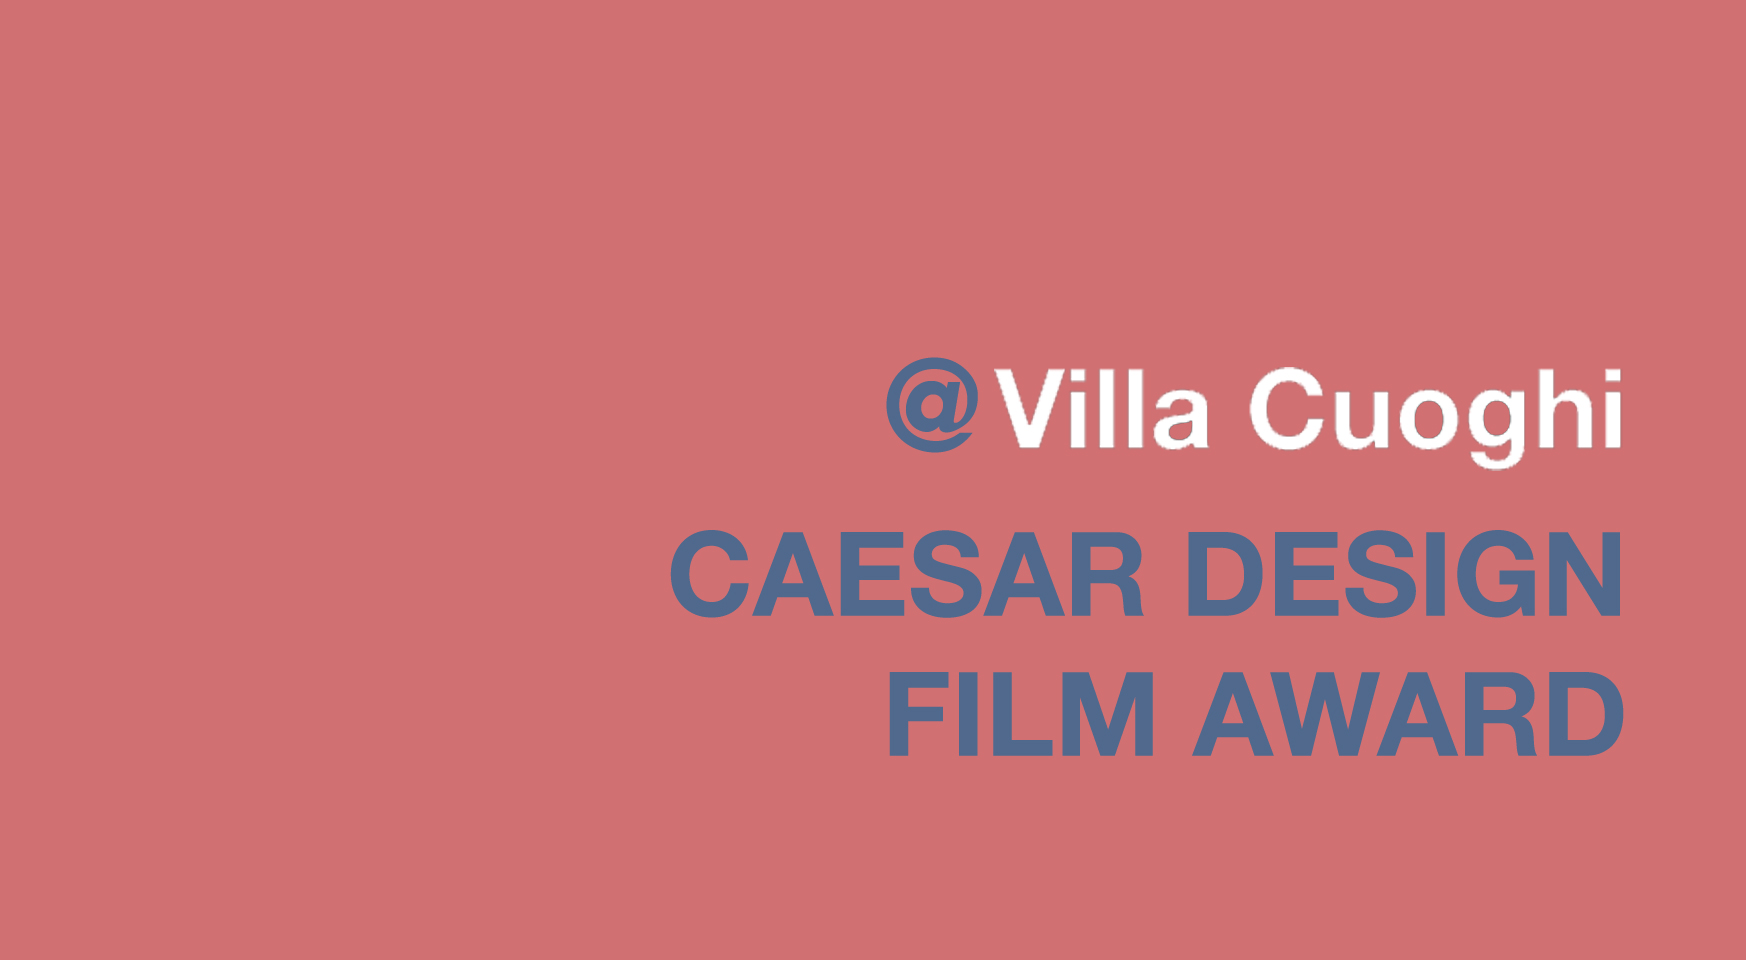 Caesar Design Film Award - EFF 2021 @ Villa Cuoghi